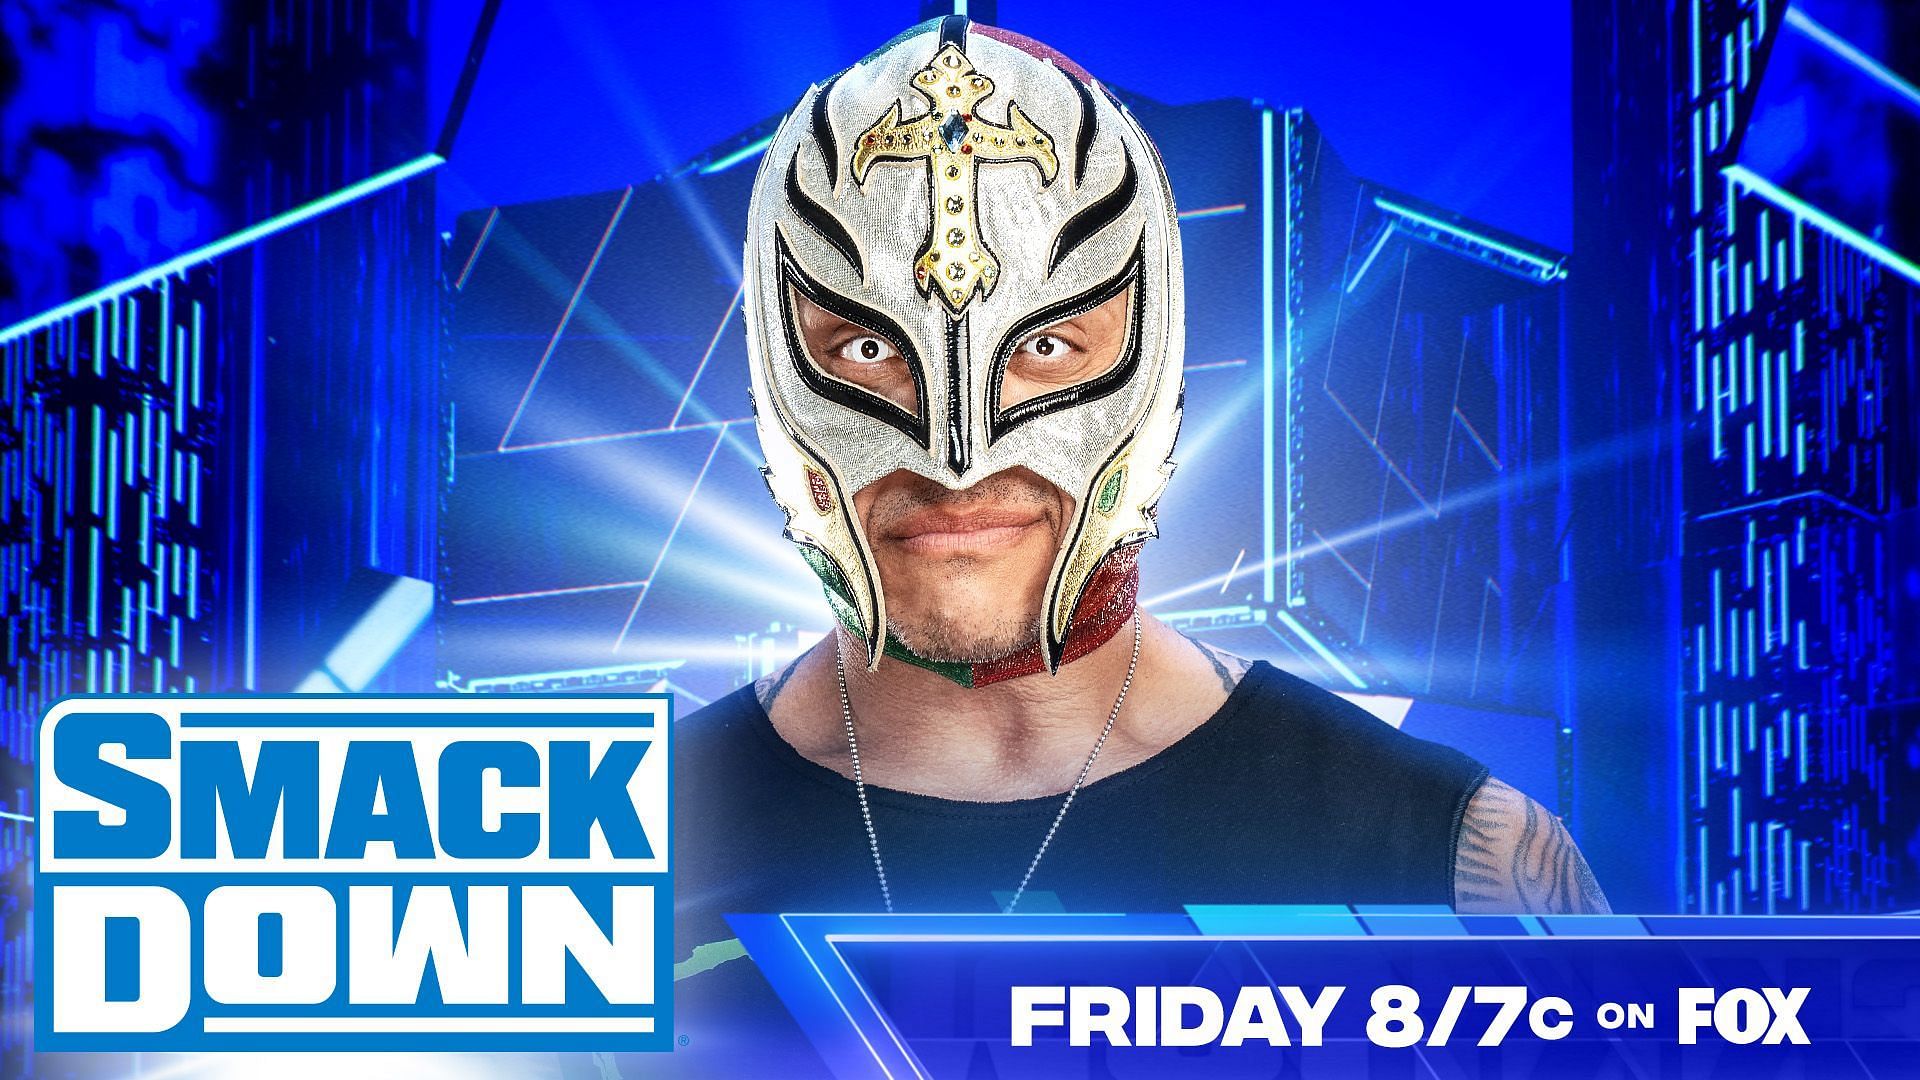 Rey Mysterio is set to return on WWE SmackDown next week